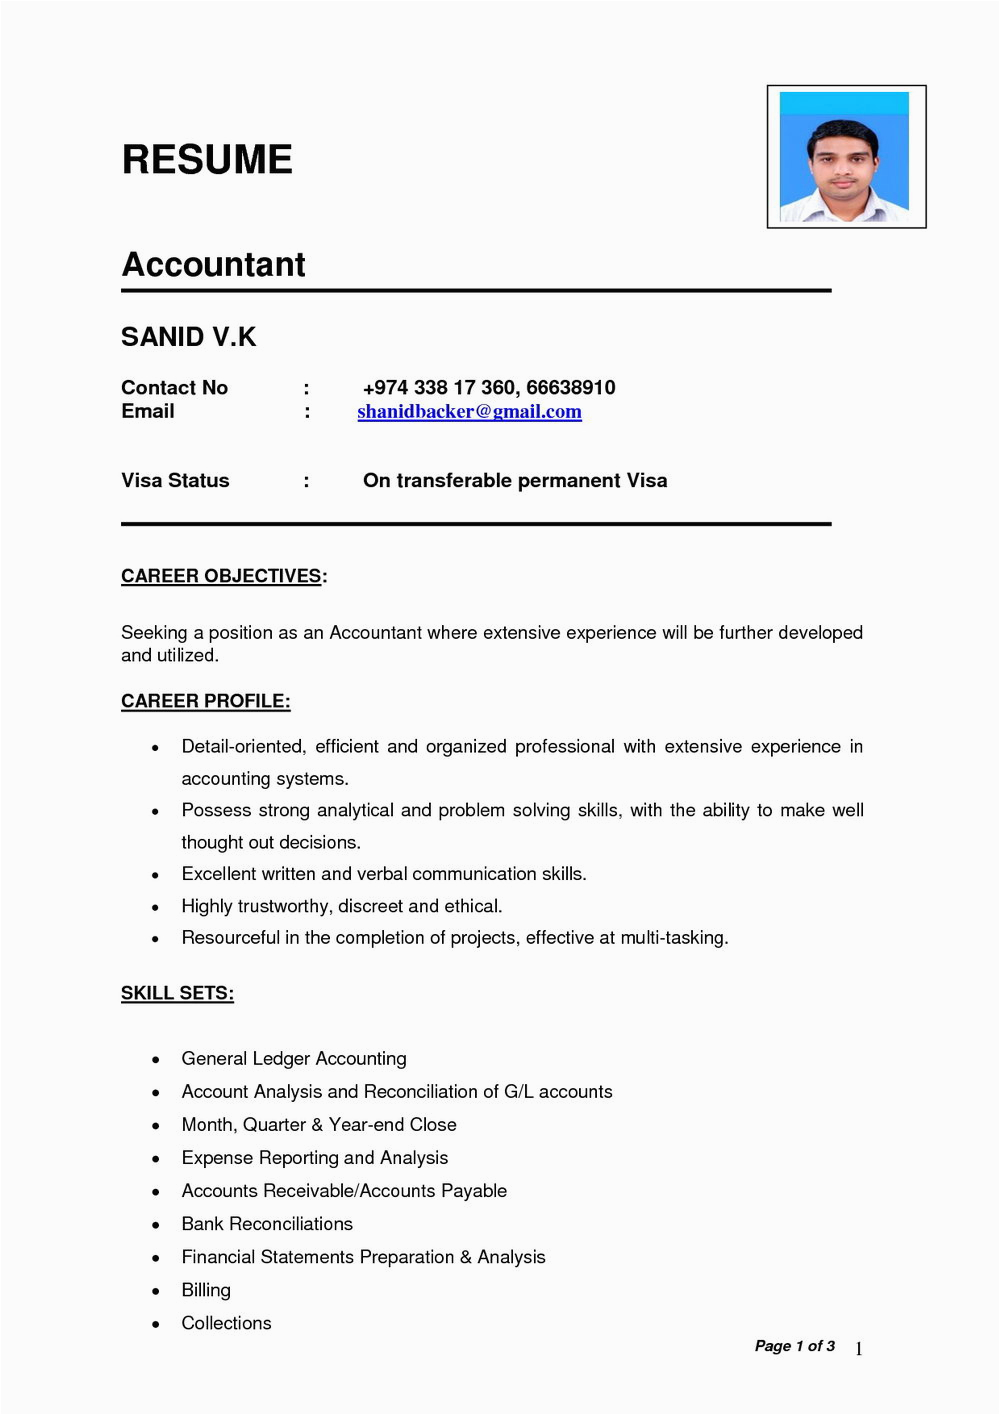 Sample Resume for Jobs In India Resume format for Dentist Job In India